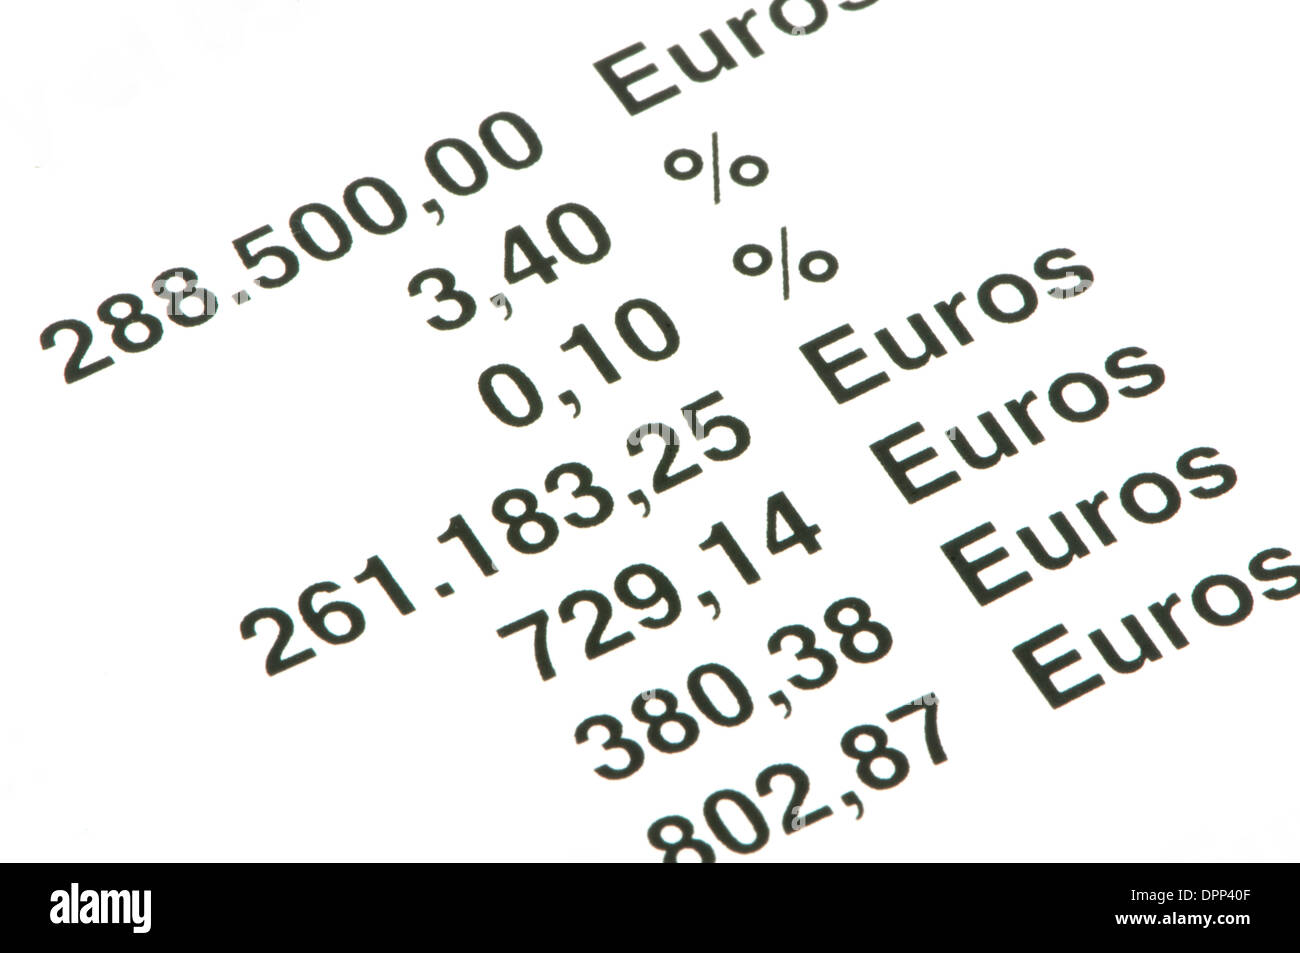 economic accounts on a white background Stock Photo